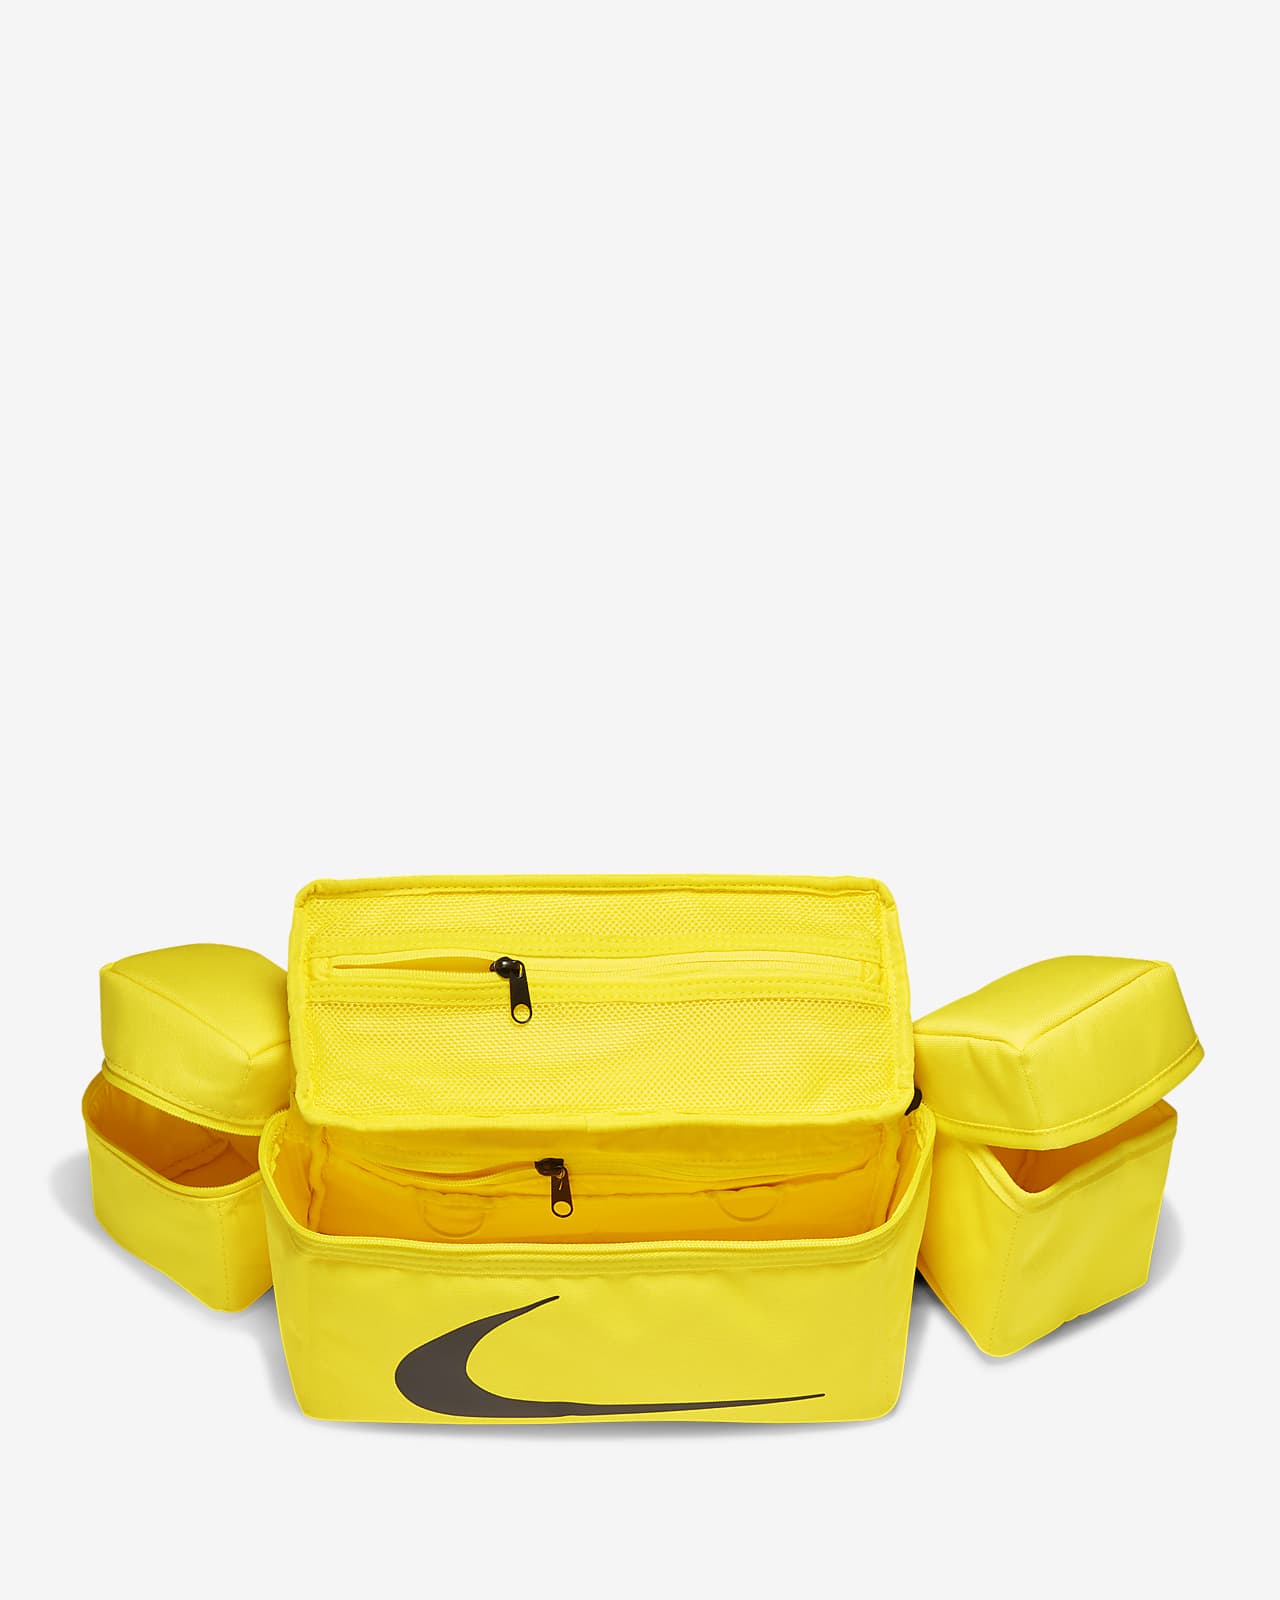 YELLOW NIKE DUFFLE BAG in yellow